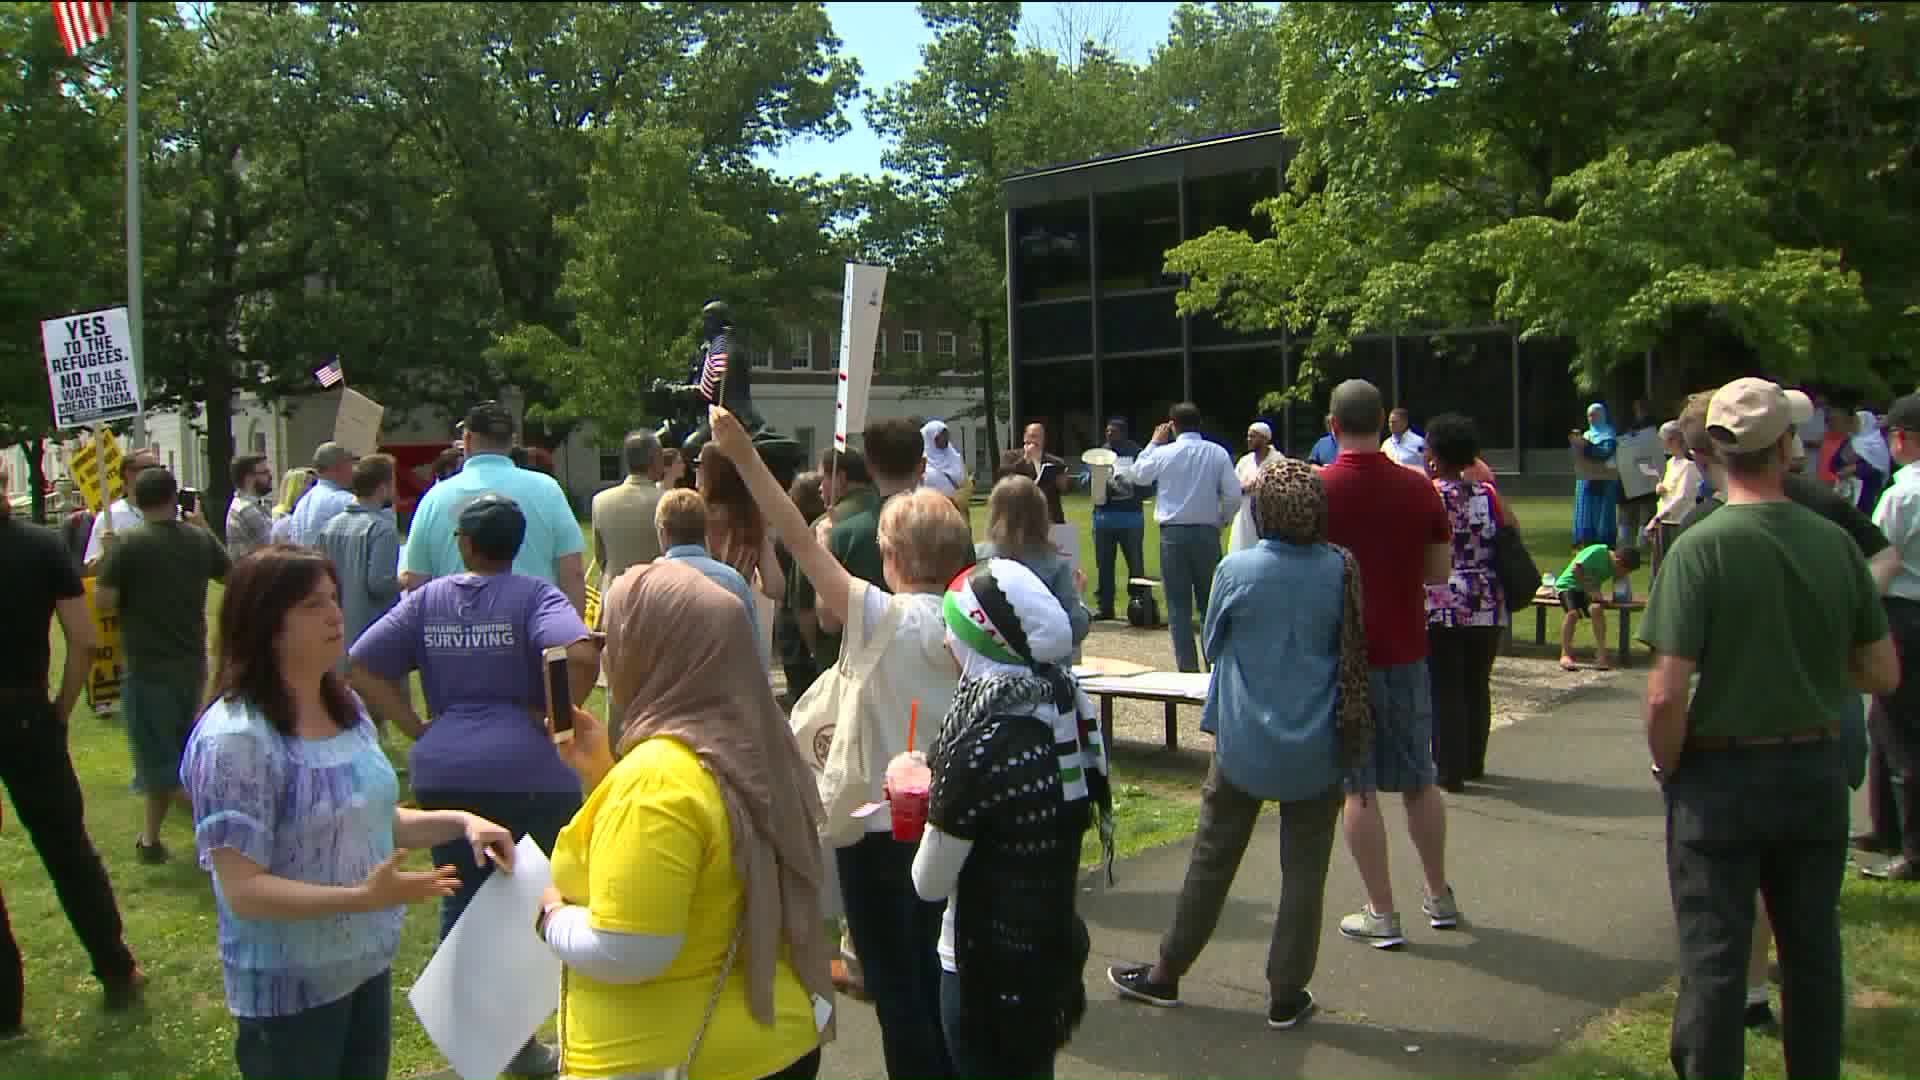 Anti-Islamic law, Muslim demonstrators gather in Waterbury